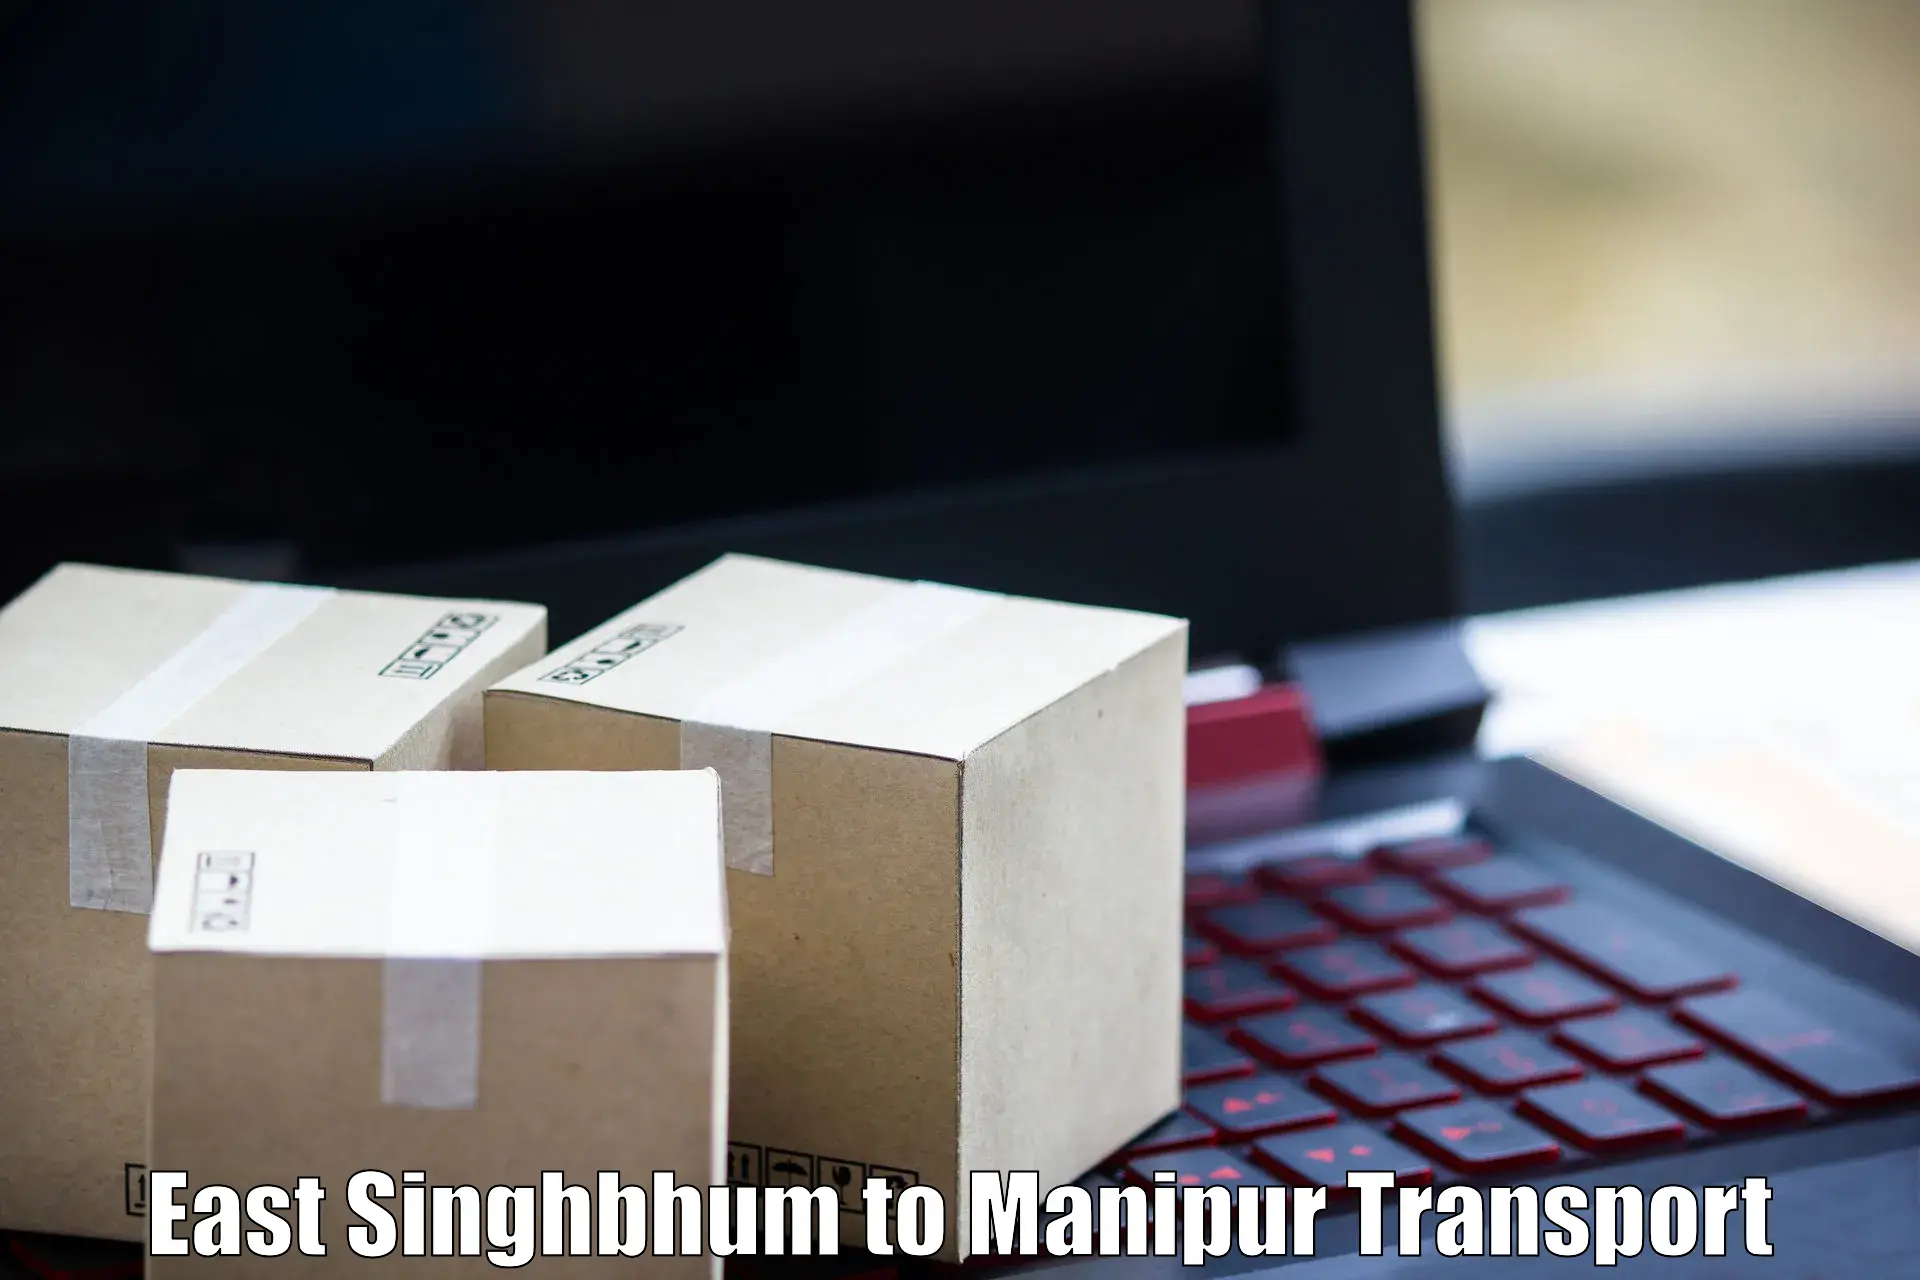 Online transport service East Singhbhum to Manipur